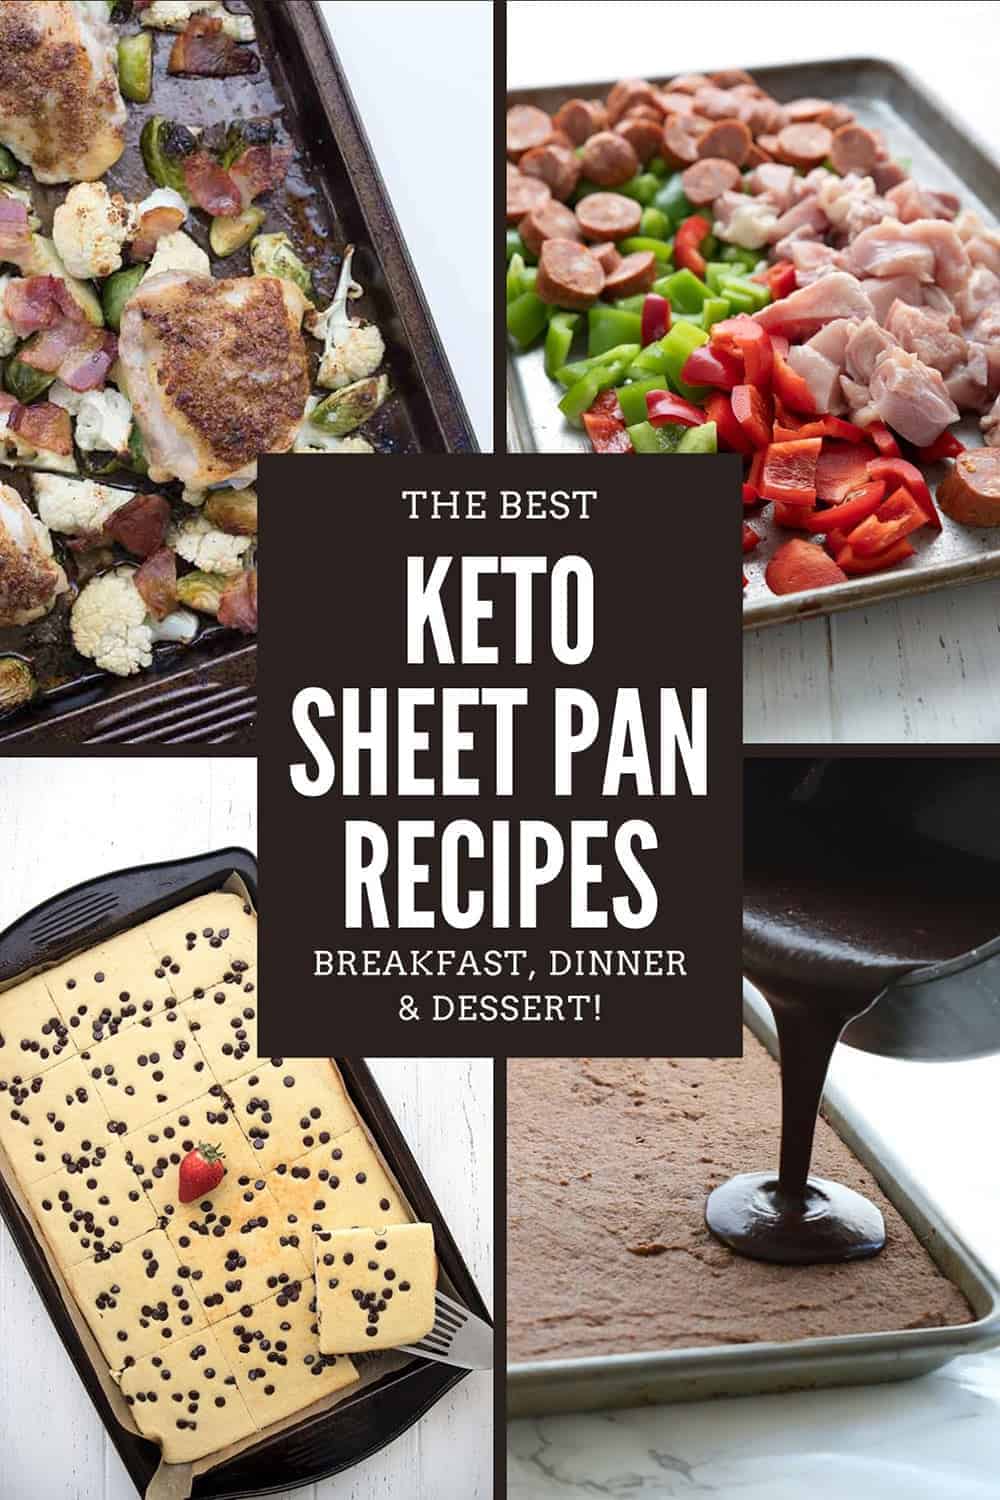 A collage of photos showing keto sheep pan recipes